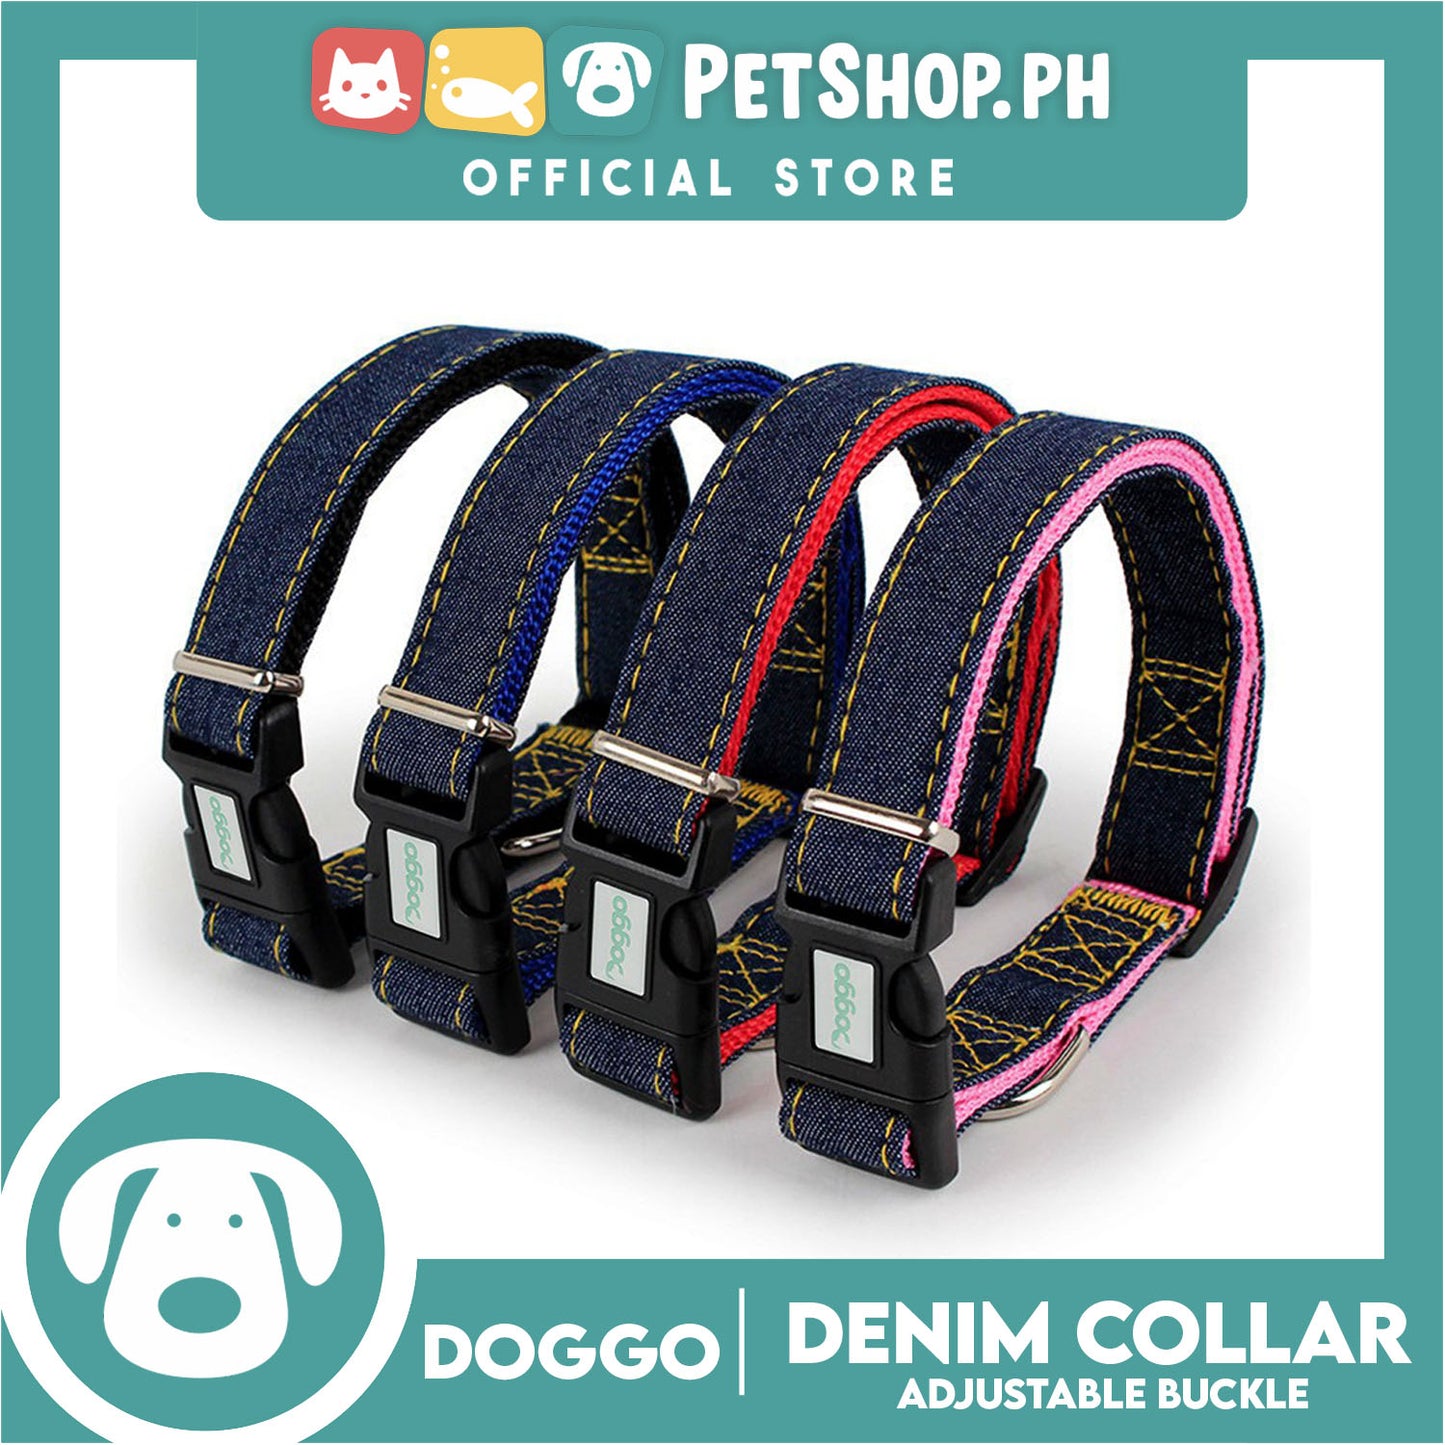 Doggo Collar Denim Design Medium (Black) Perfect Collar for Your Dog